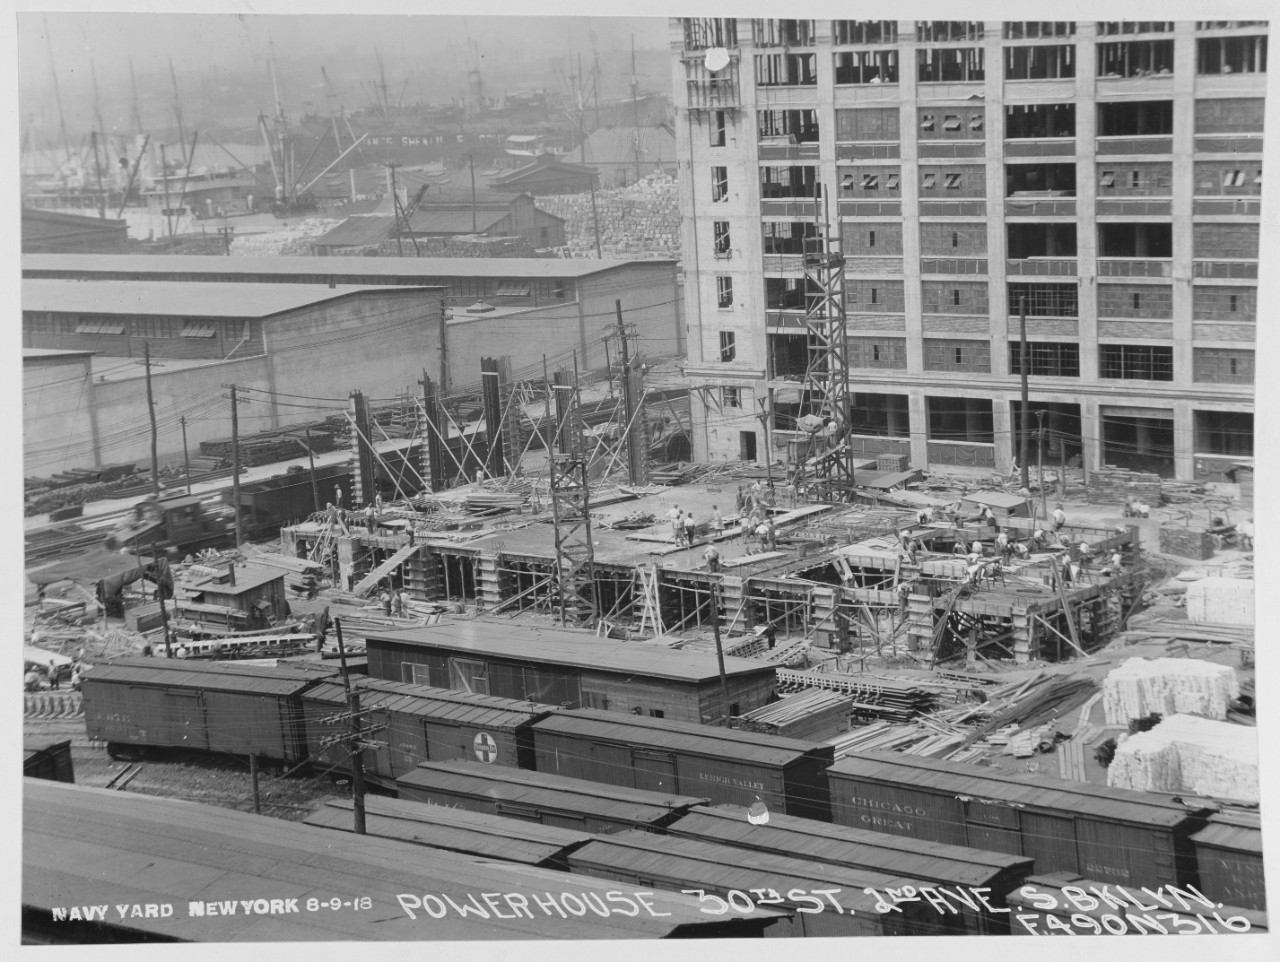 Power house. Navy Yard New York